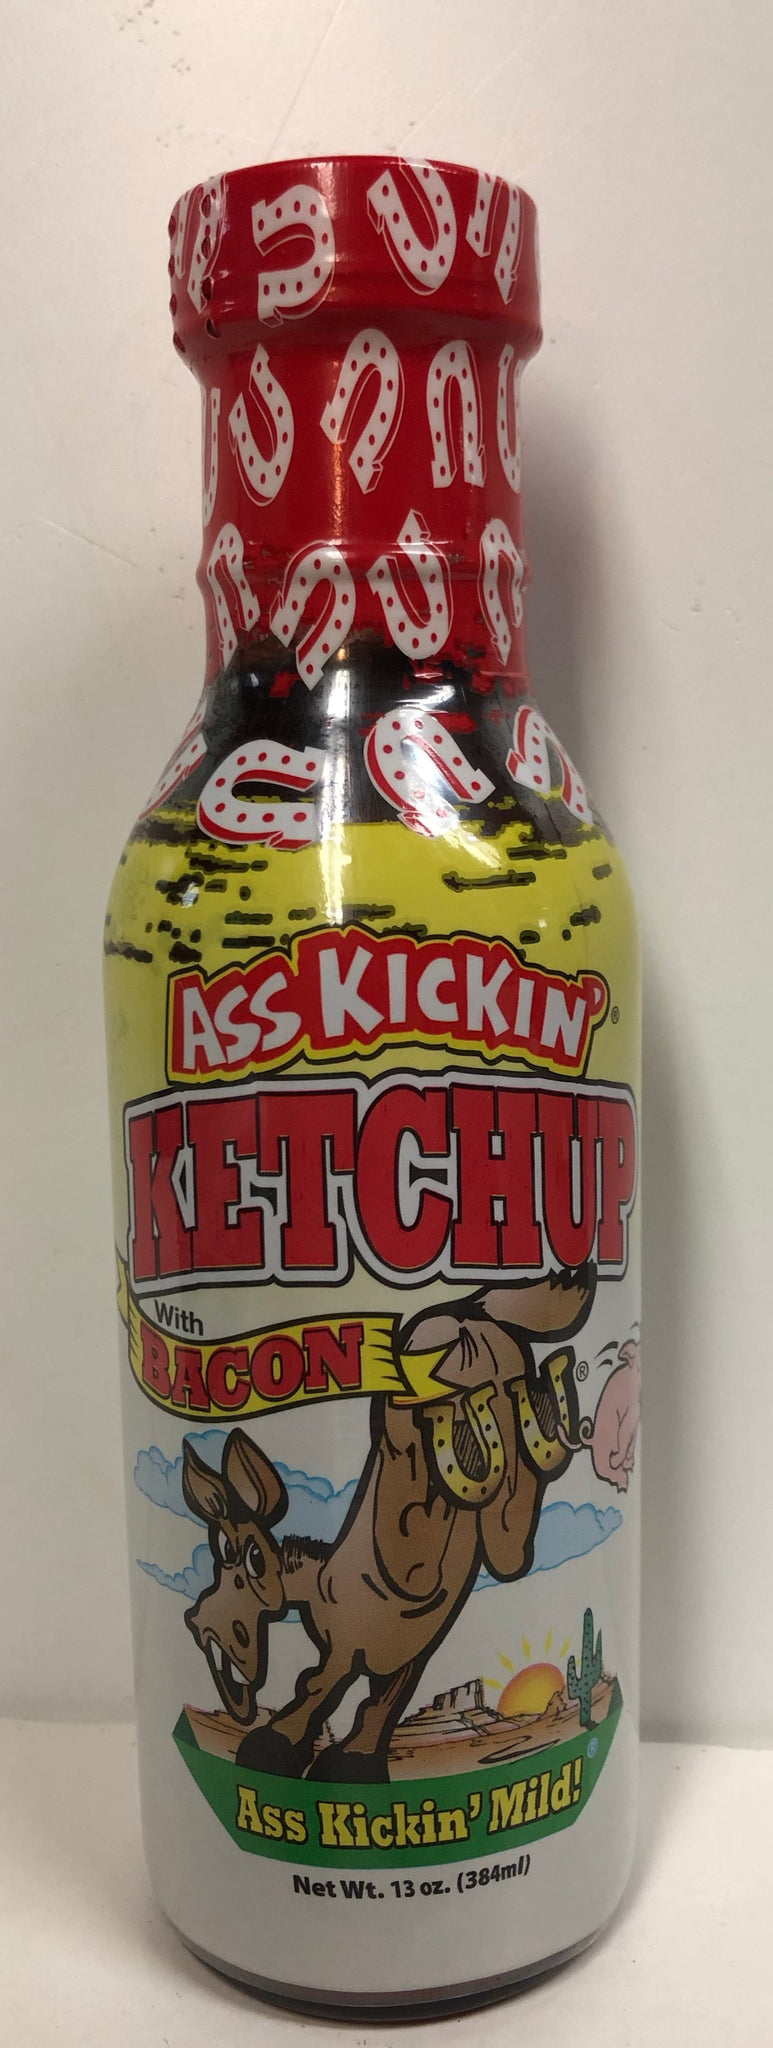 Ass Kickin’ Ketchup with Bacon